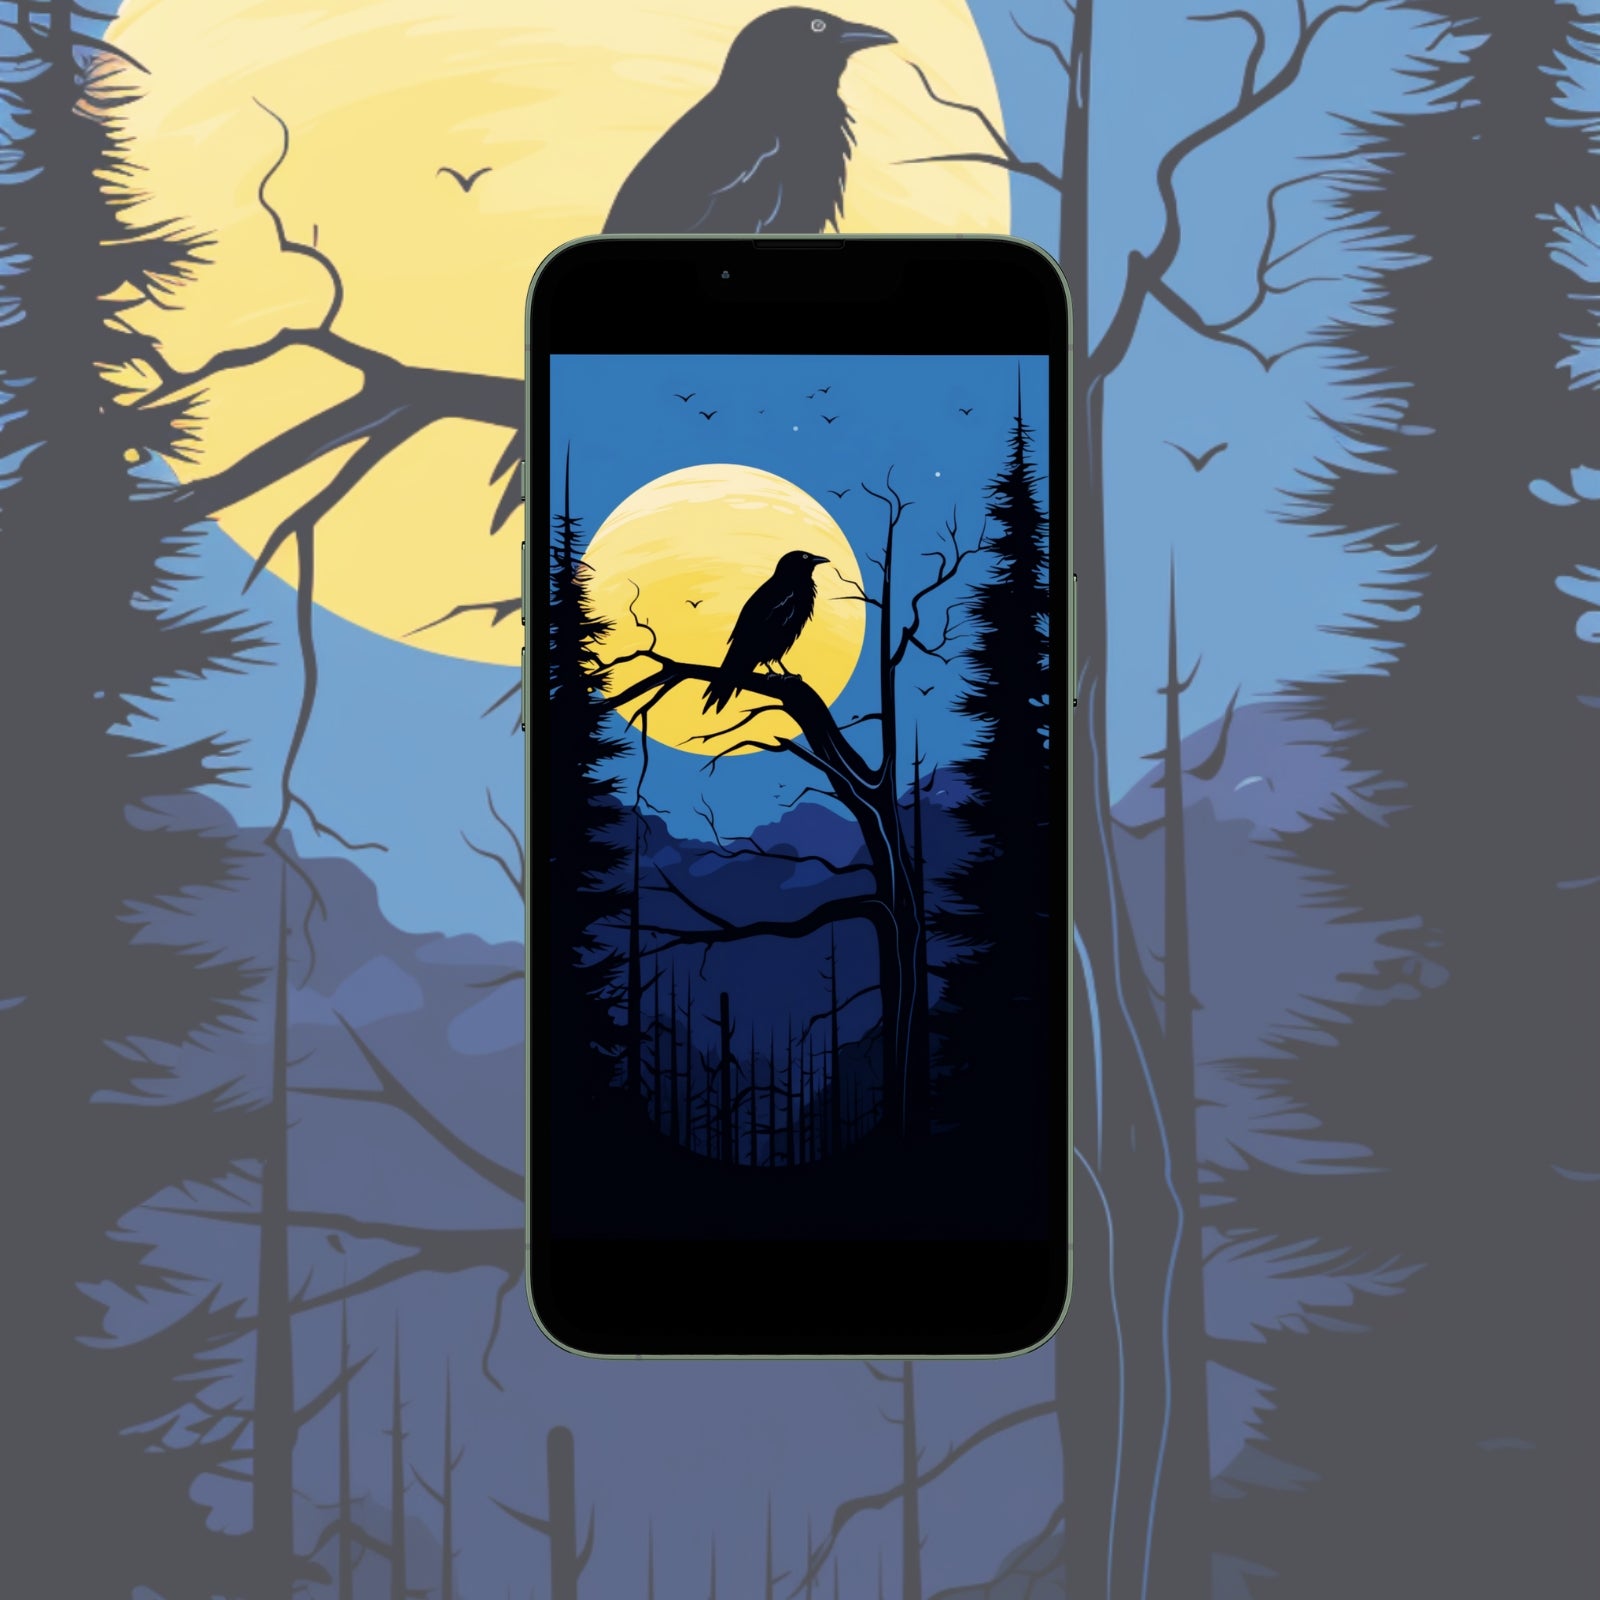 Mobile Wallpaper: Ravens in the Night #3